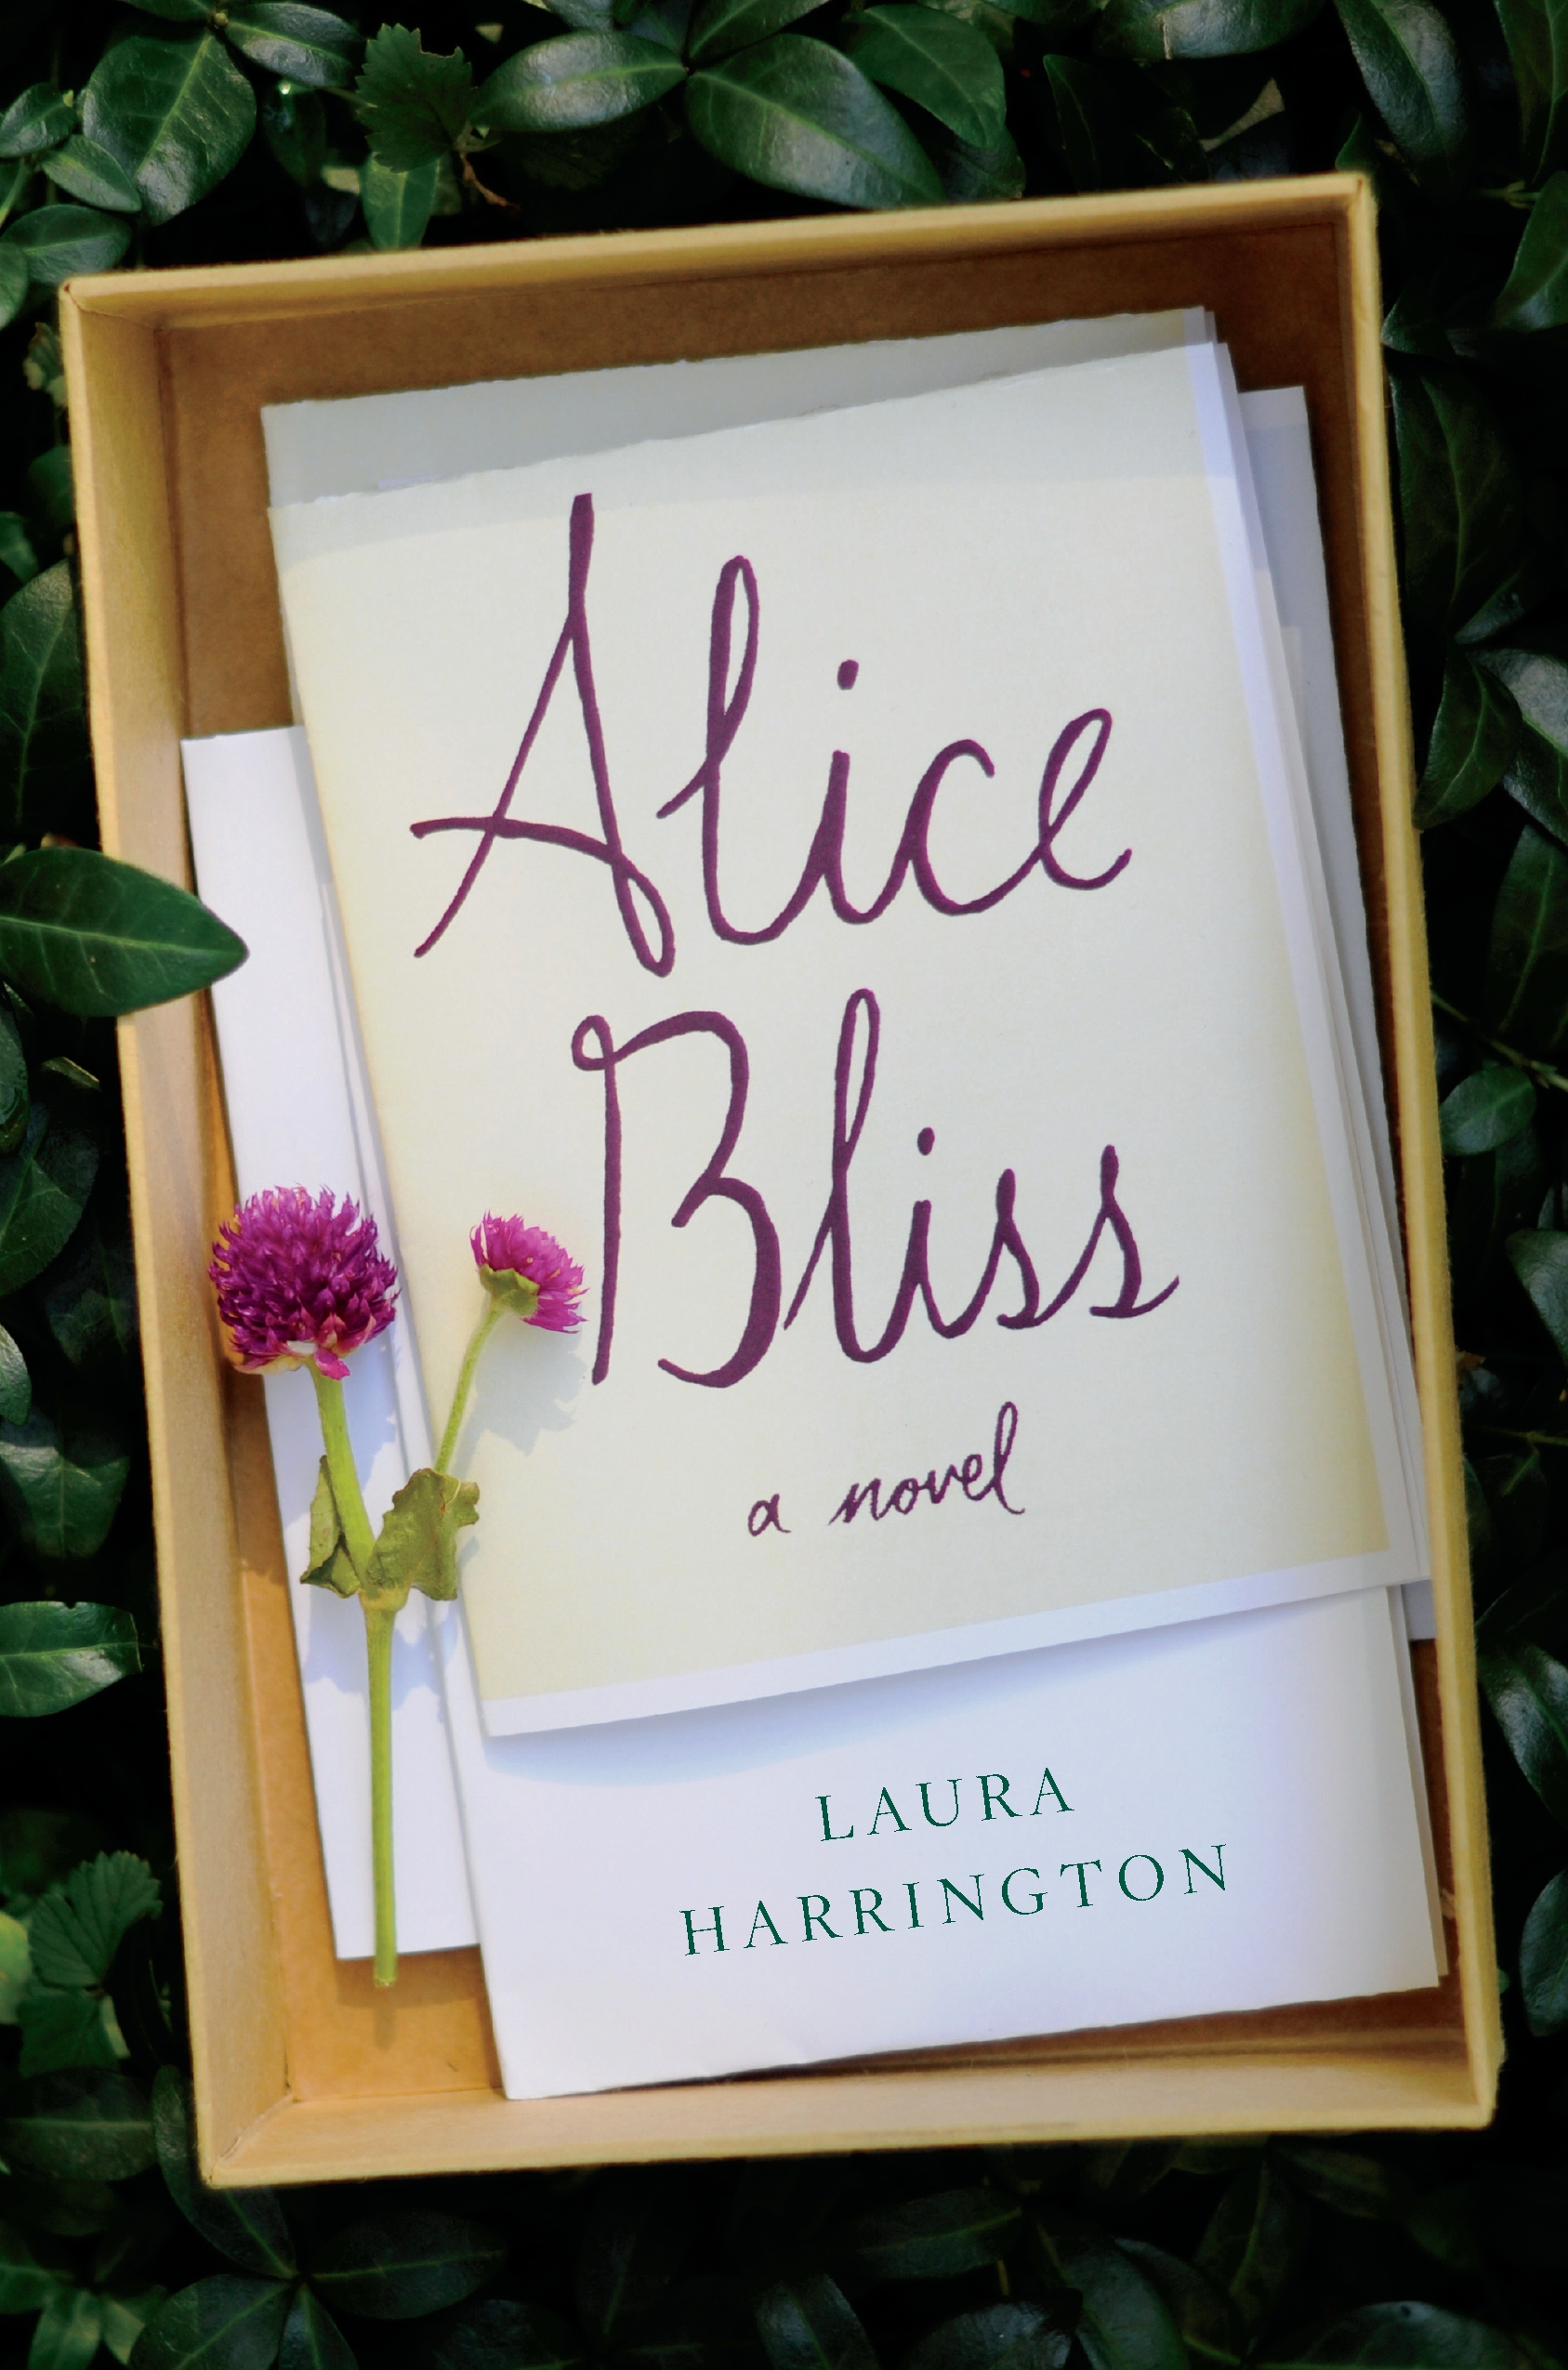 Laura Harrington (Author of Alice Bliss).